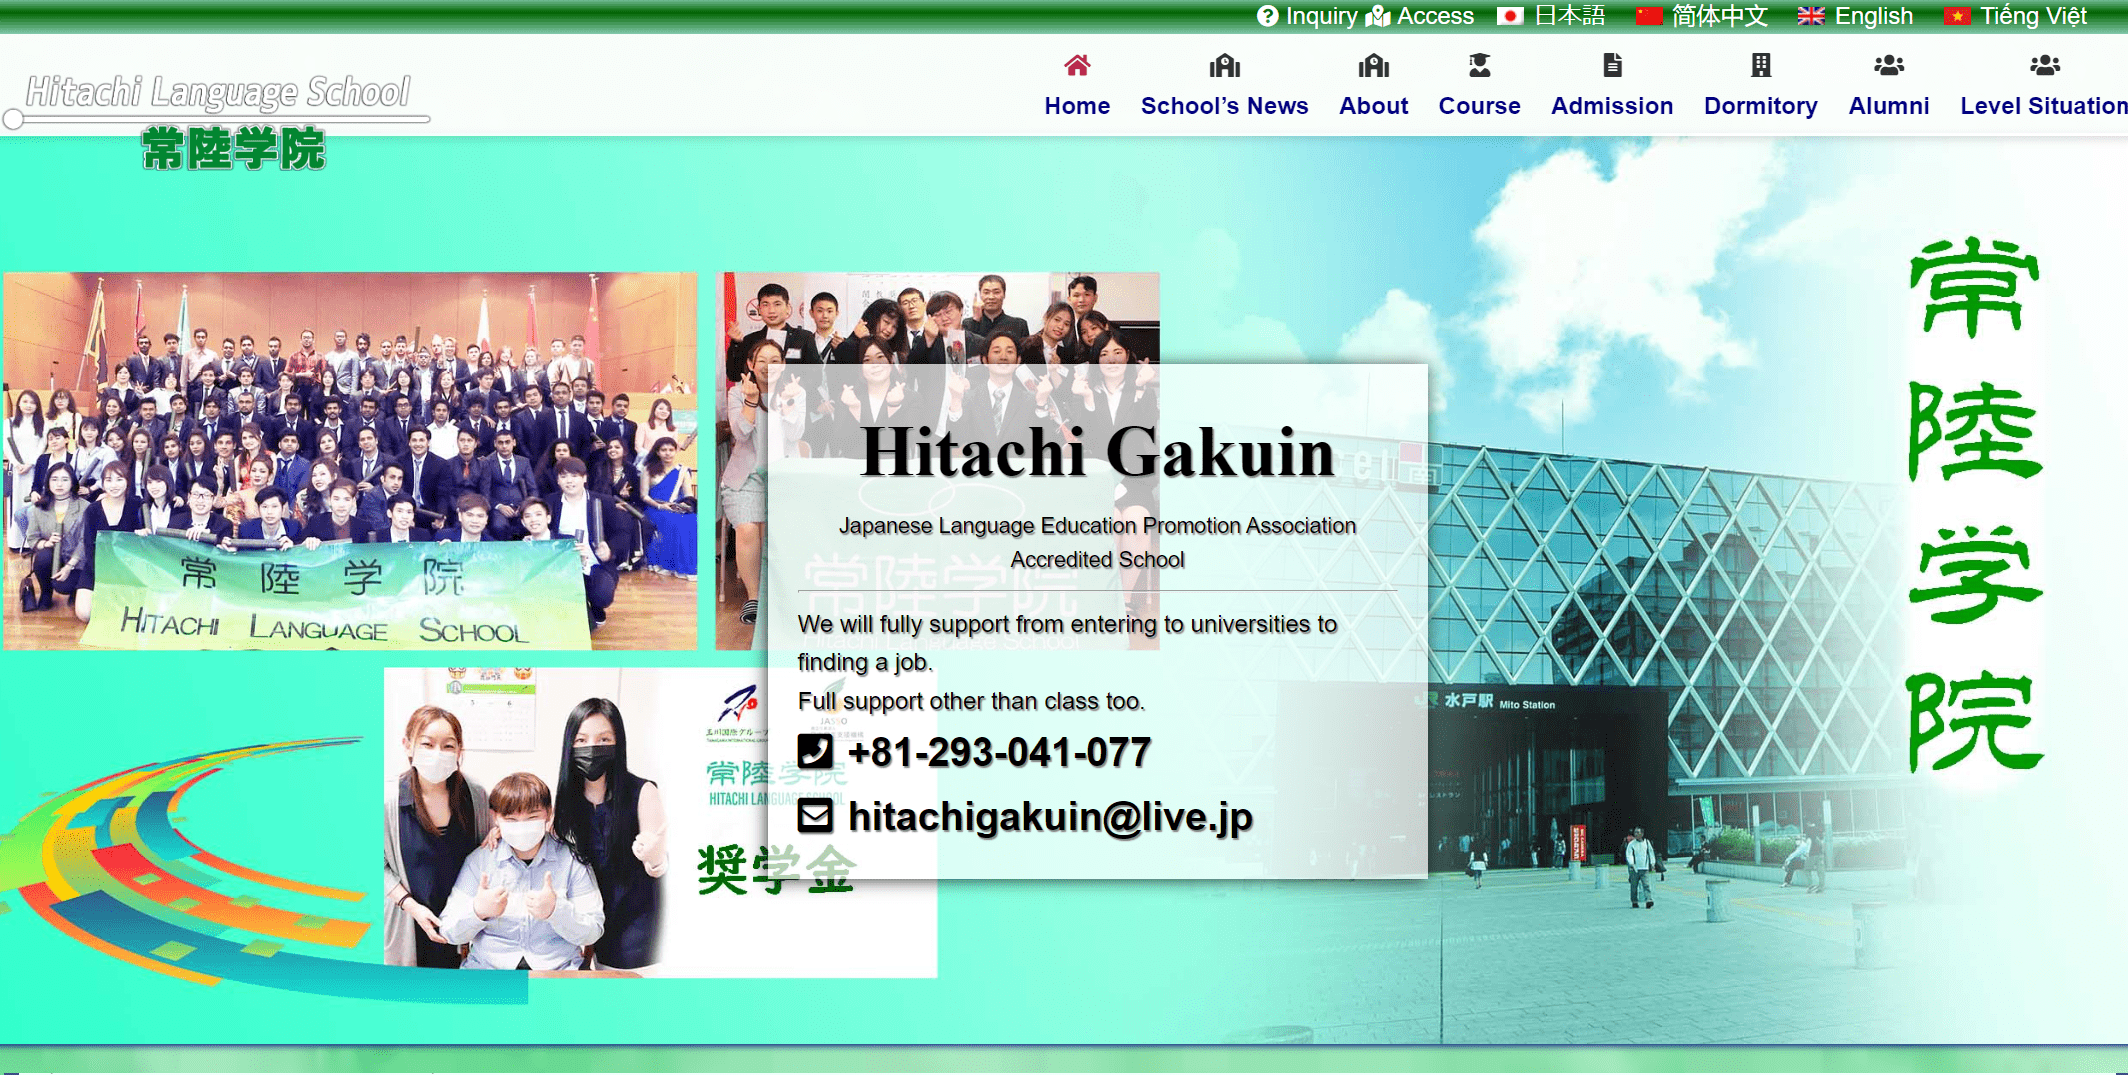 Hitachi Language School website